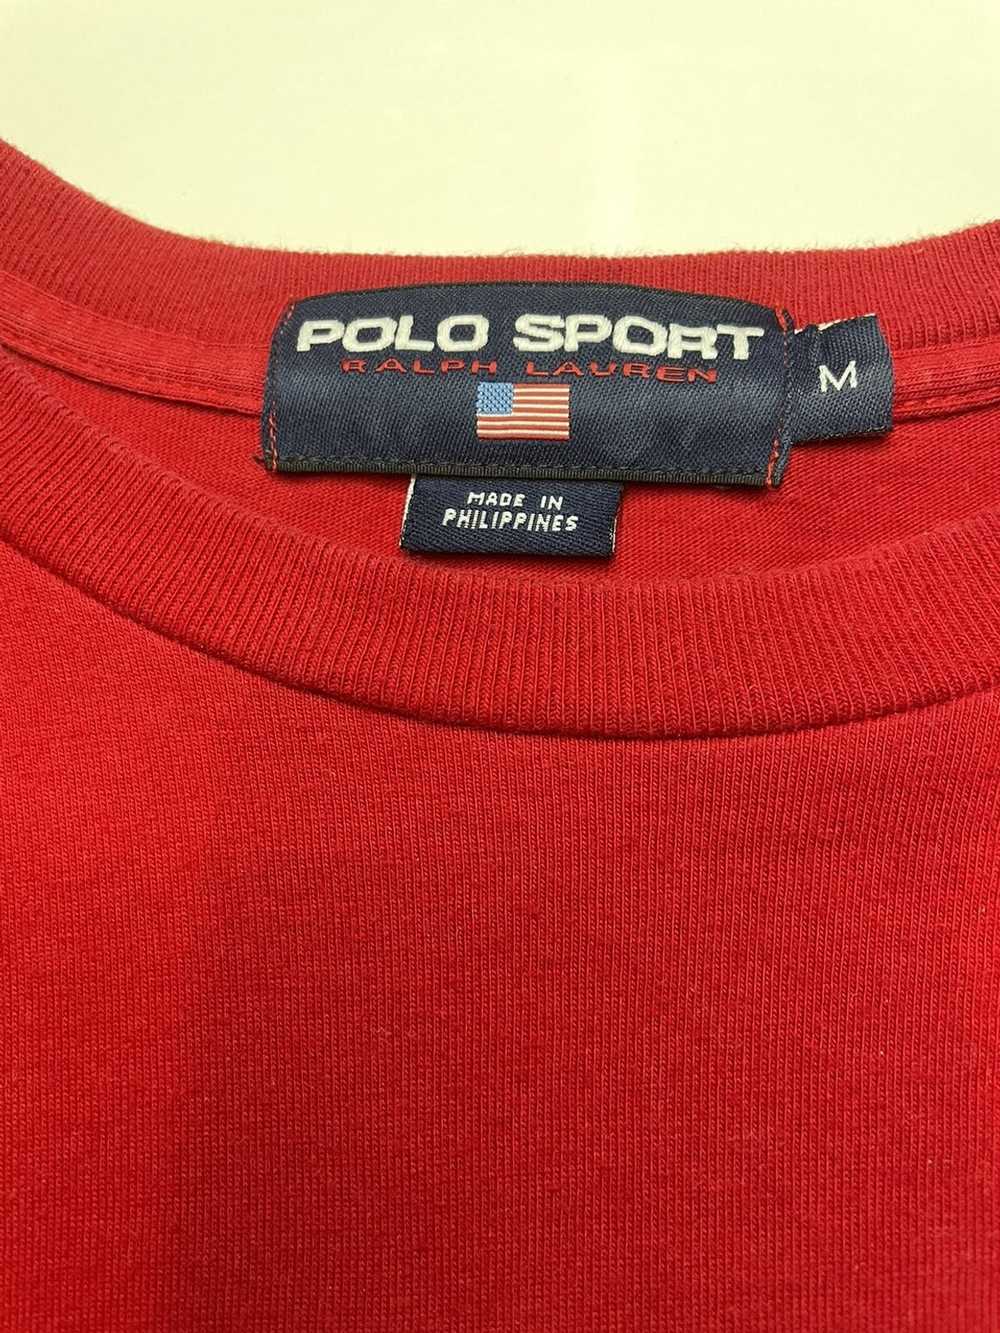 Polo Ralph Lauren Vintage 90’s Polo Sport RL 67 T… - image 3